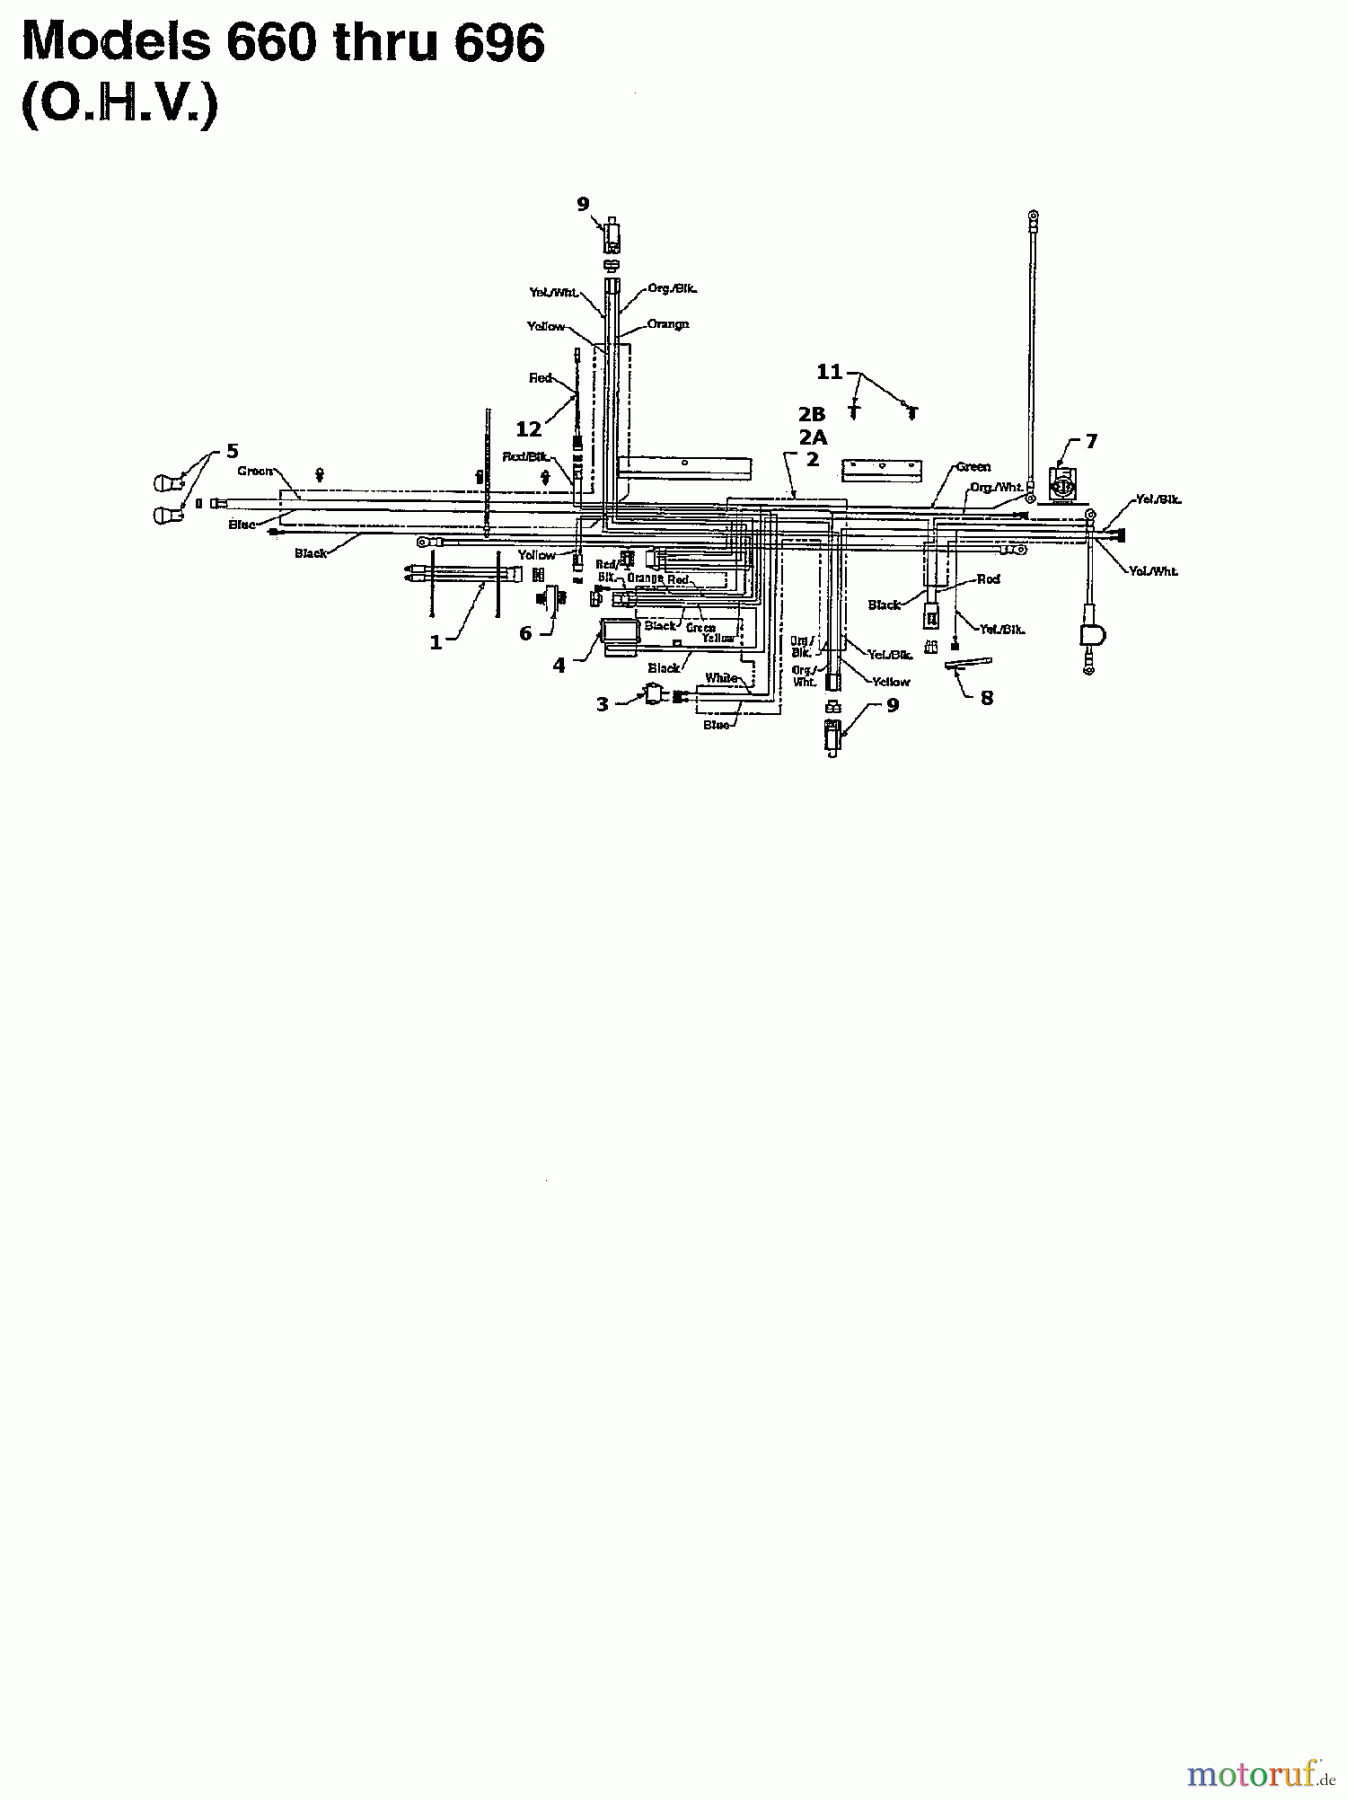  White Rasentraktoren LT 160 136T676G679  (1996) Schaltplan für O.H.V.